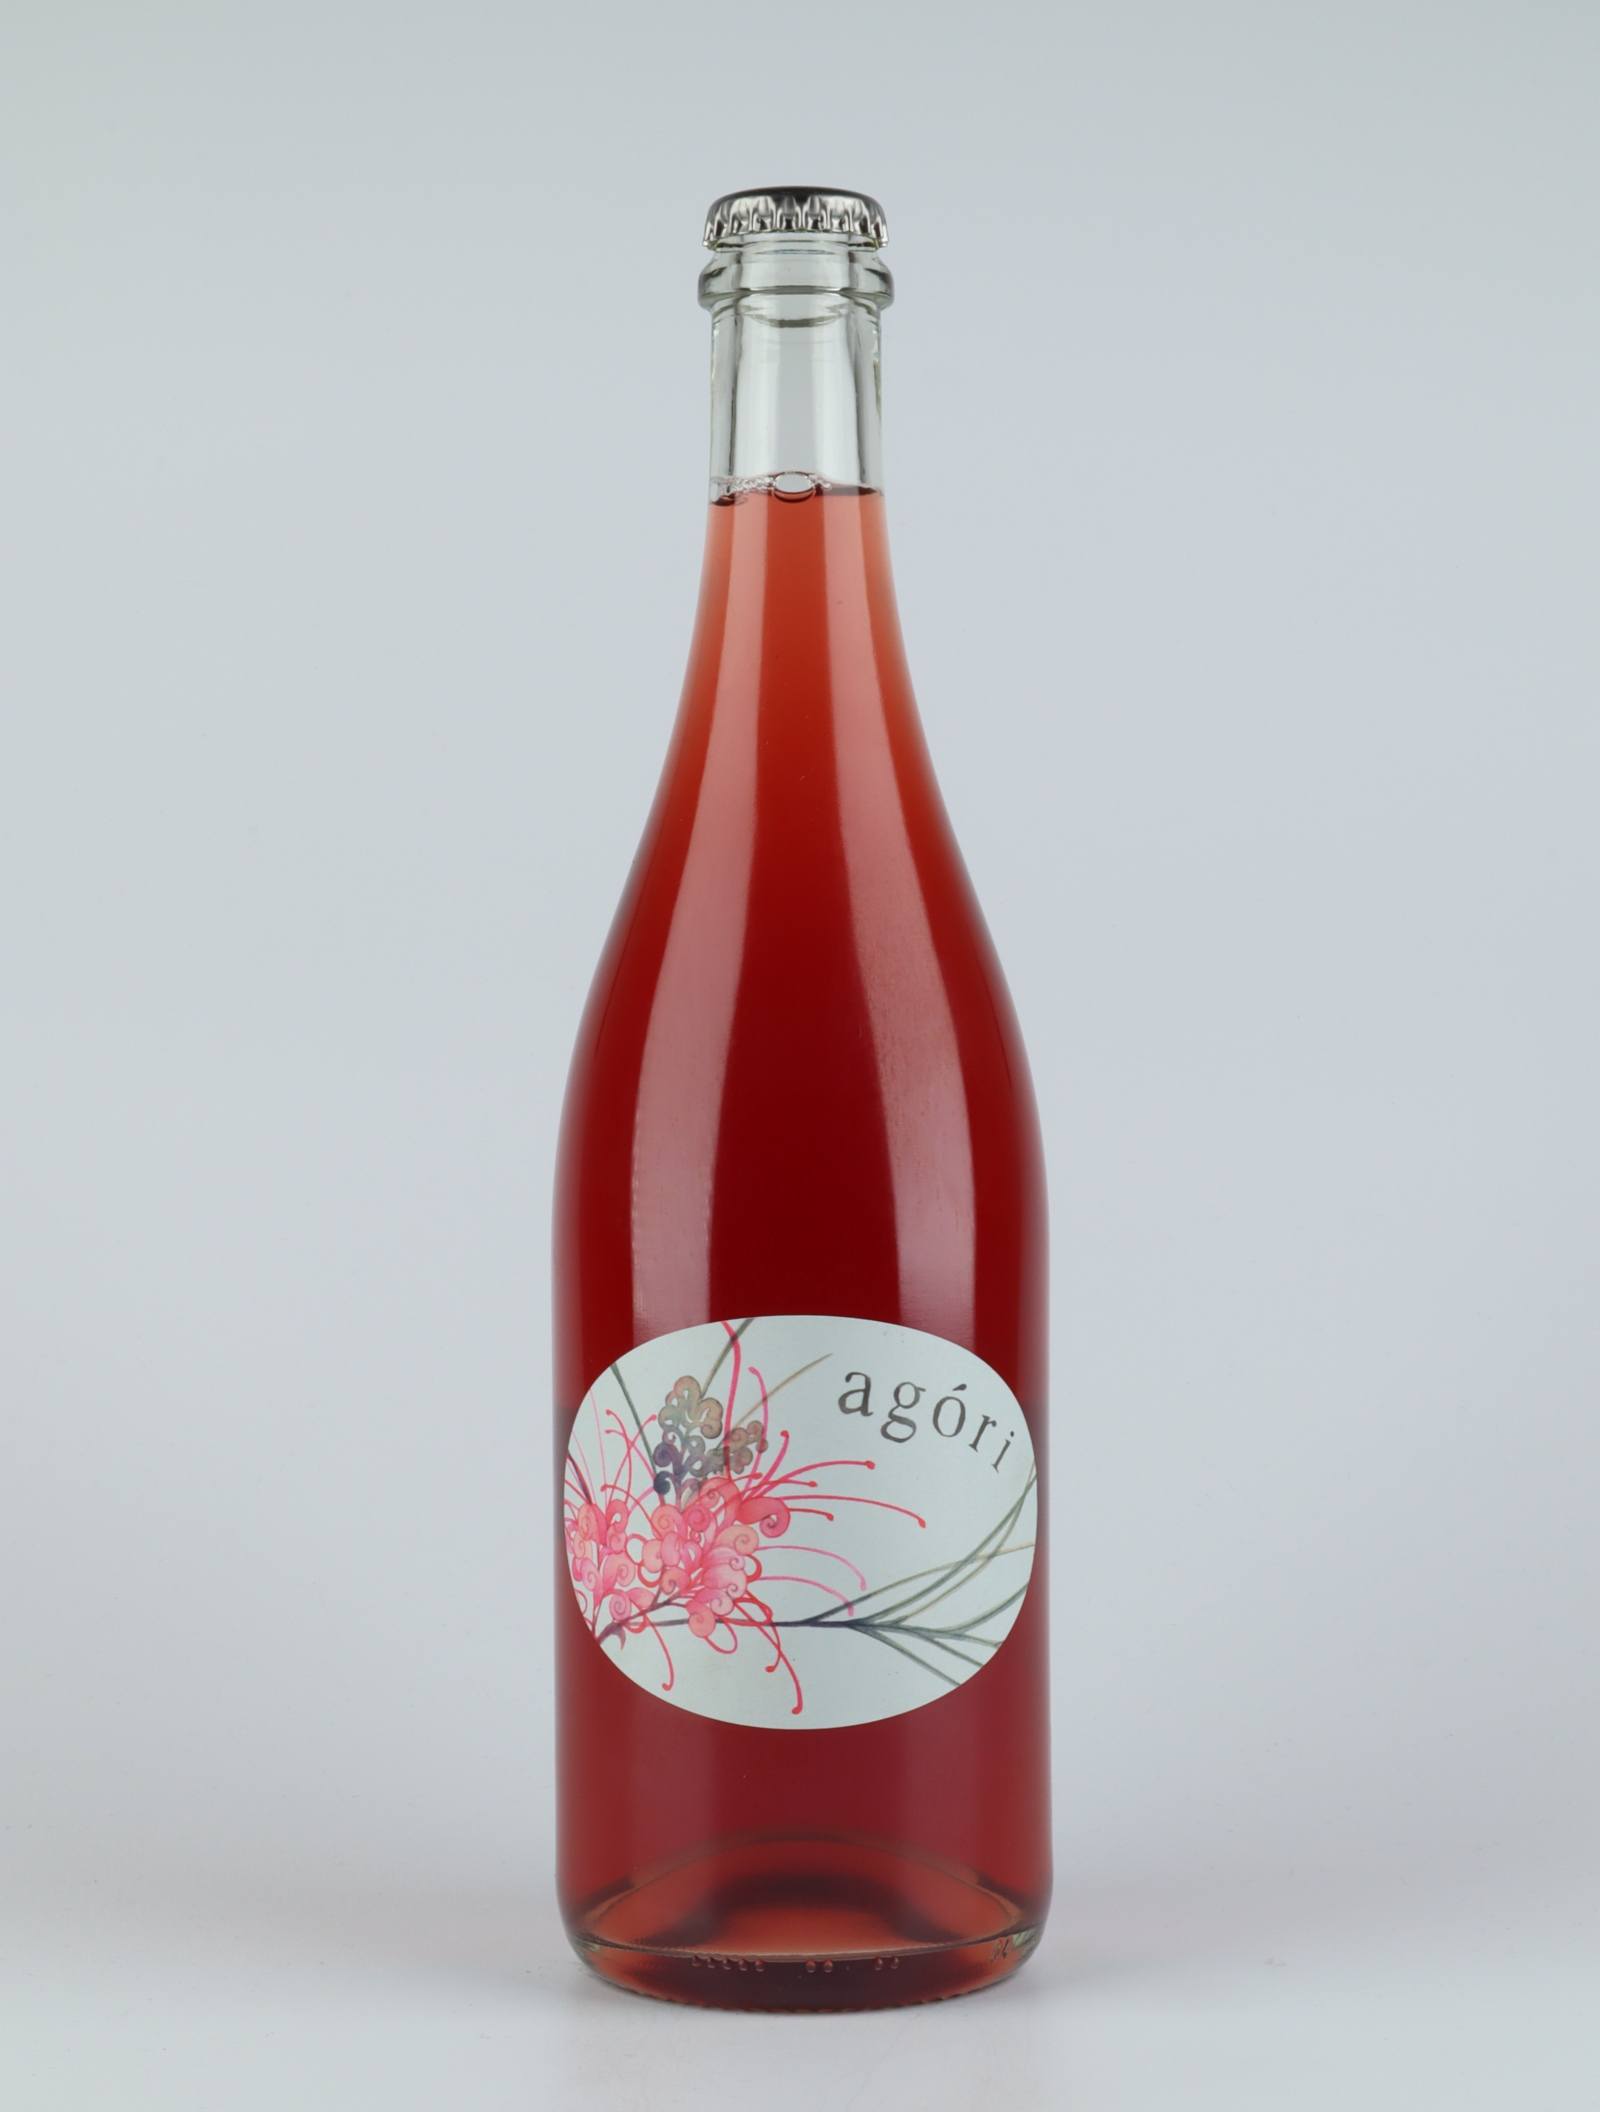 A bottle 2019 Agori Rosé Rosé from Travis Tausend, Adelaide Hills in Australia